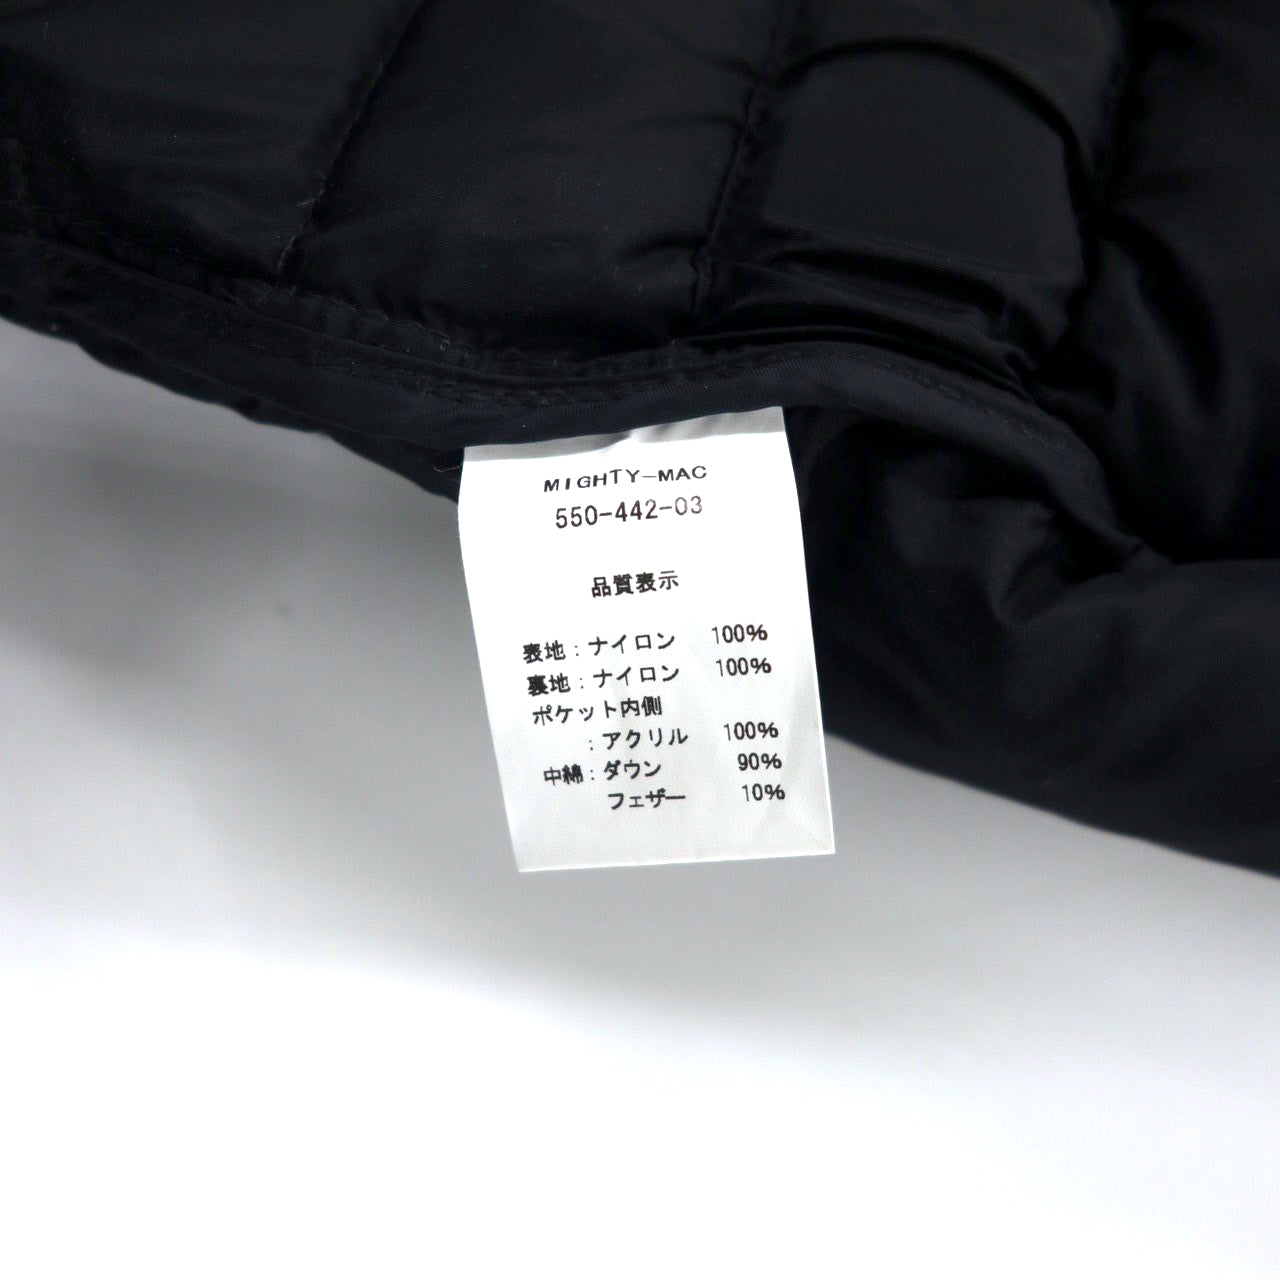 Mighty Mac Puffer Vest S Black Nylon T-shaped double zip 550-442 